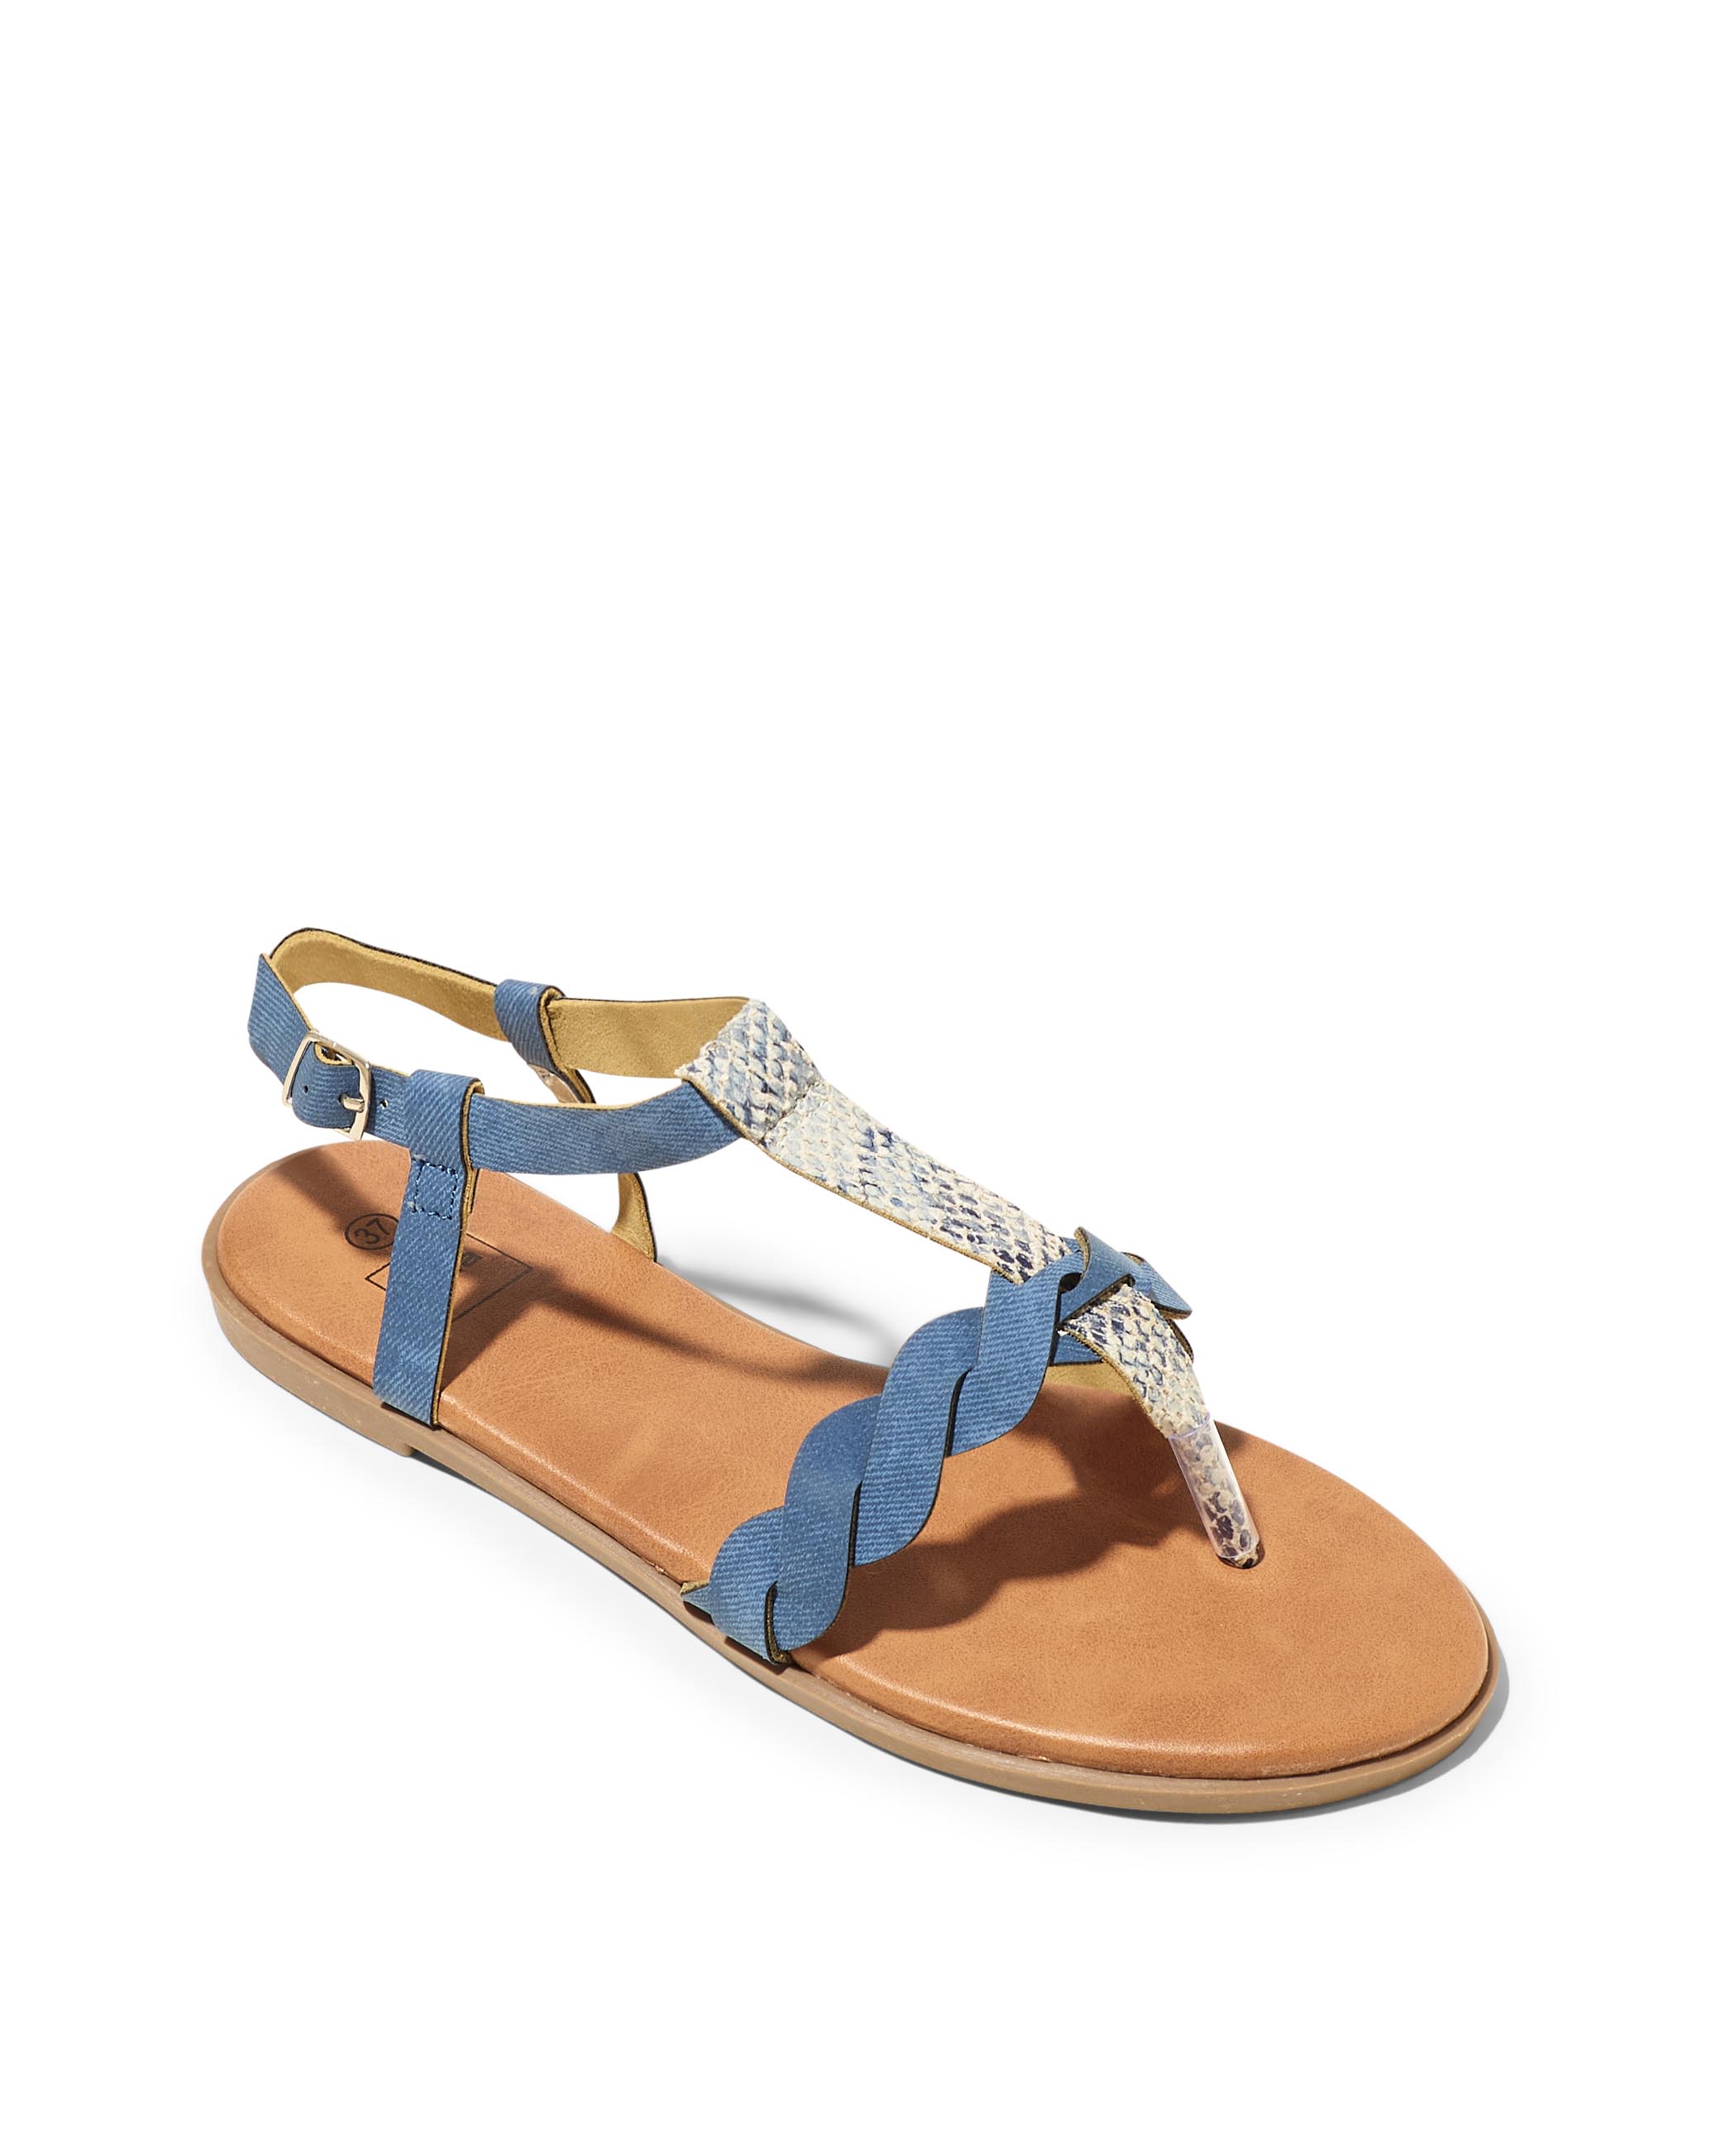 Sandales Plates Femme - Sandale Plate Python Bleu Jina - Zh4 P04